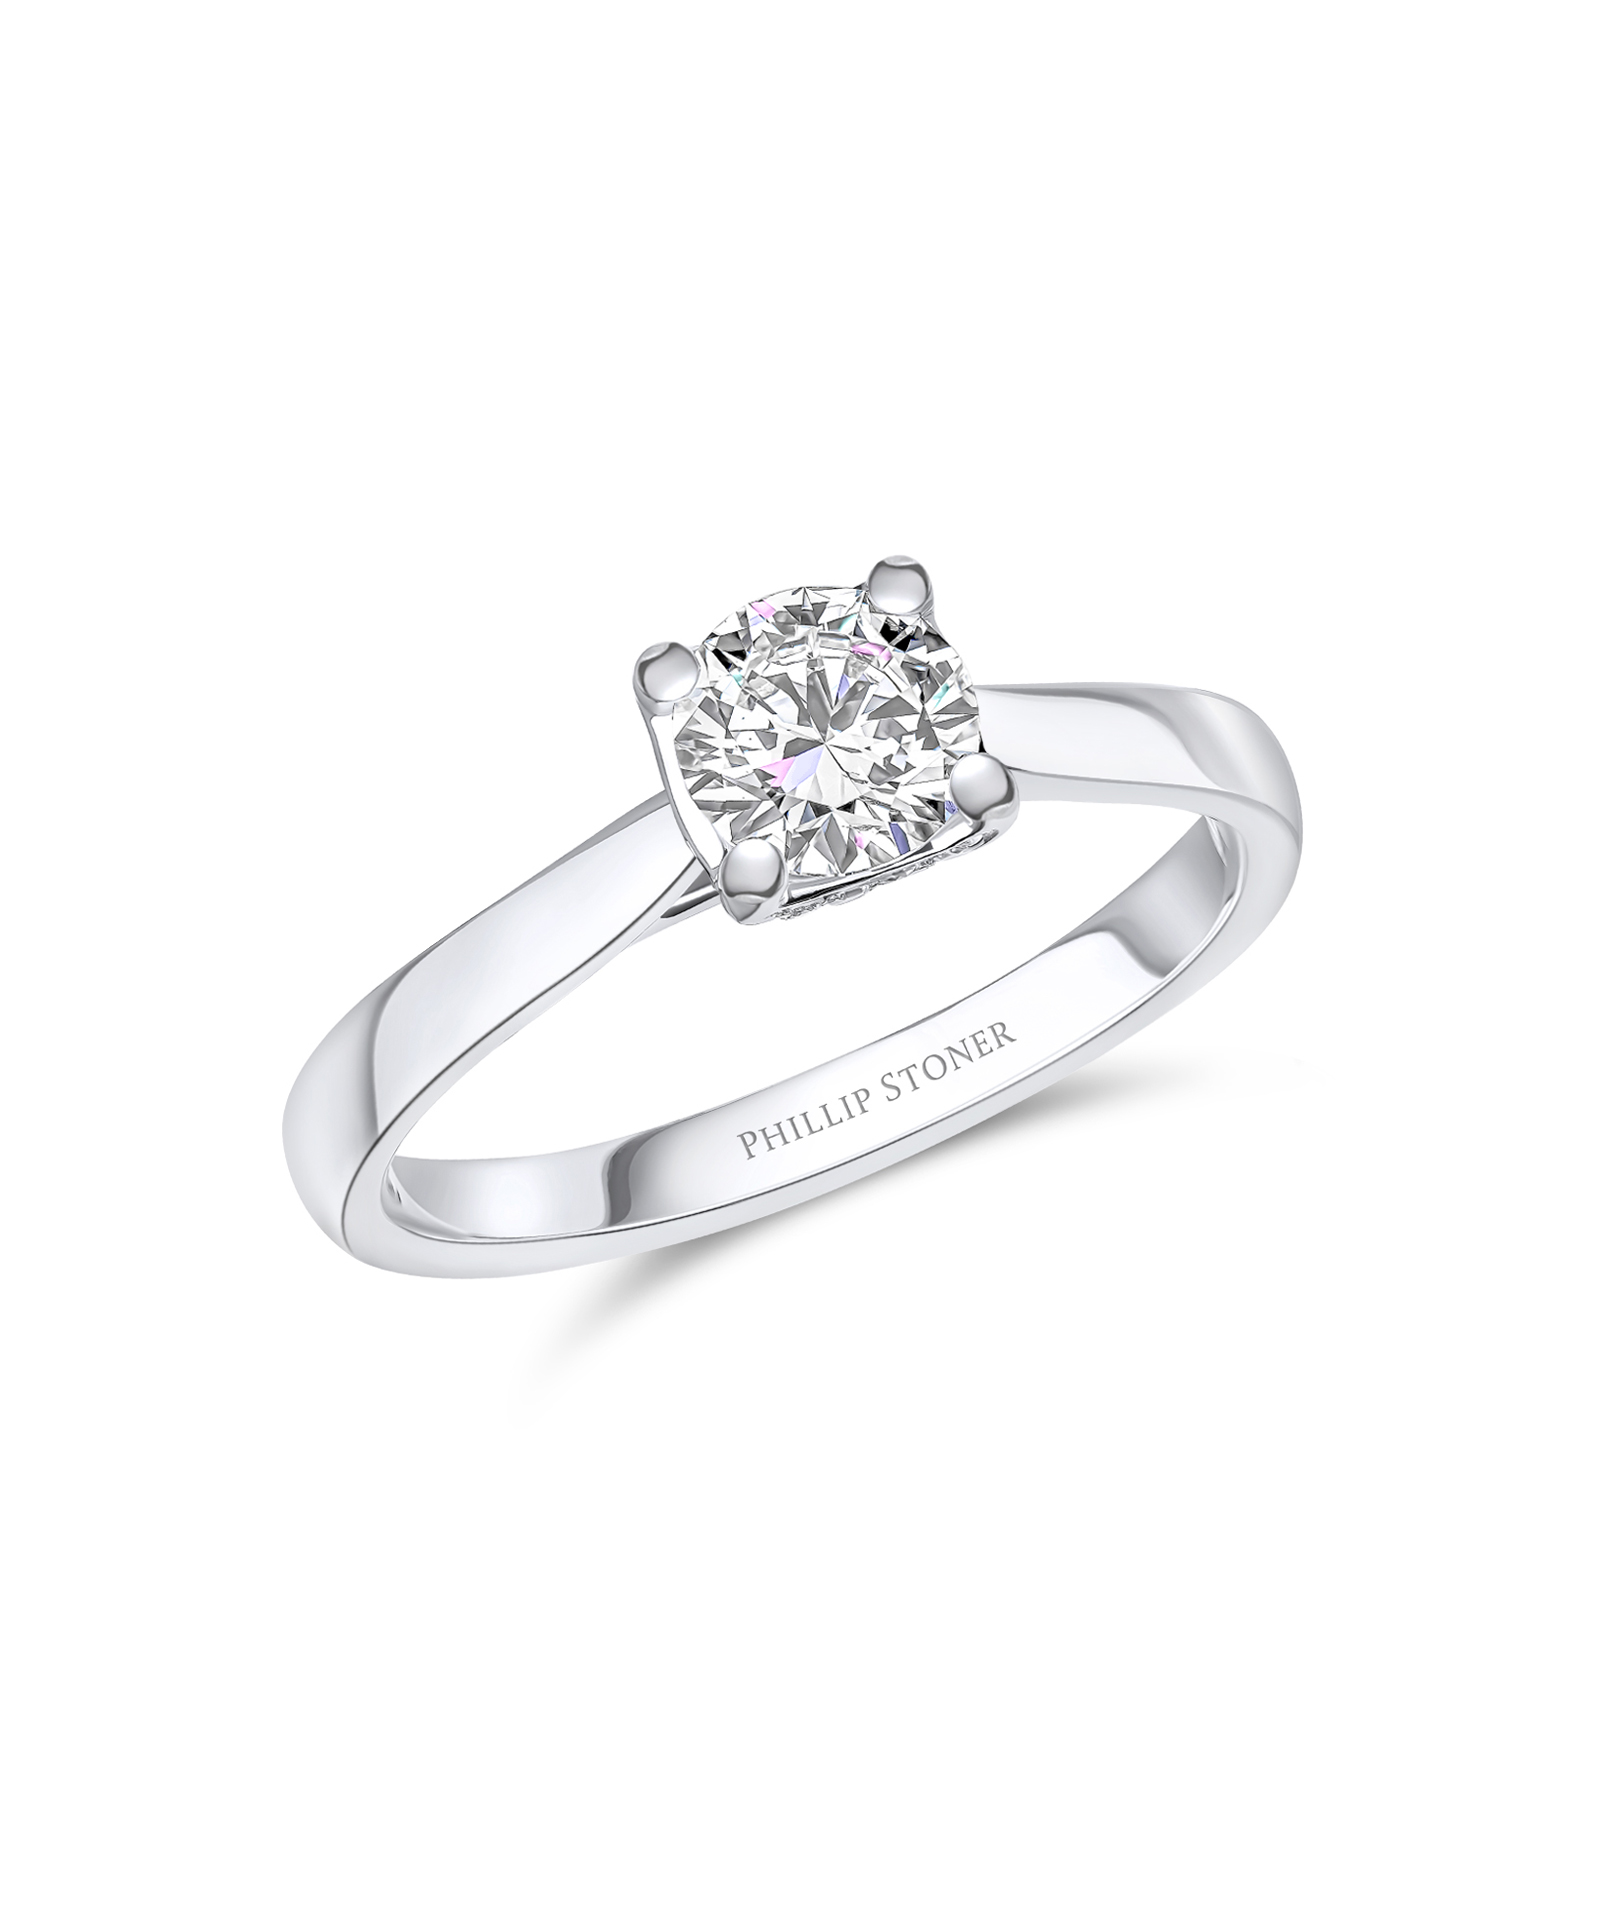 0.70ct Round Brilliant Cut Diamond Engagement Ring with Pavé Set Crown - Phillip Stoner The Jeweller